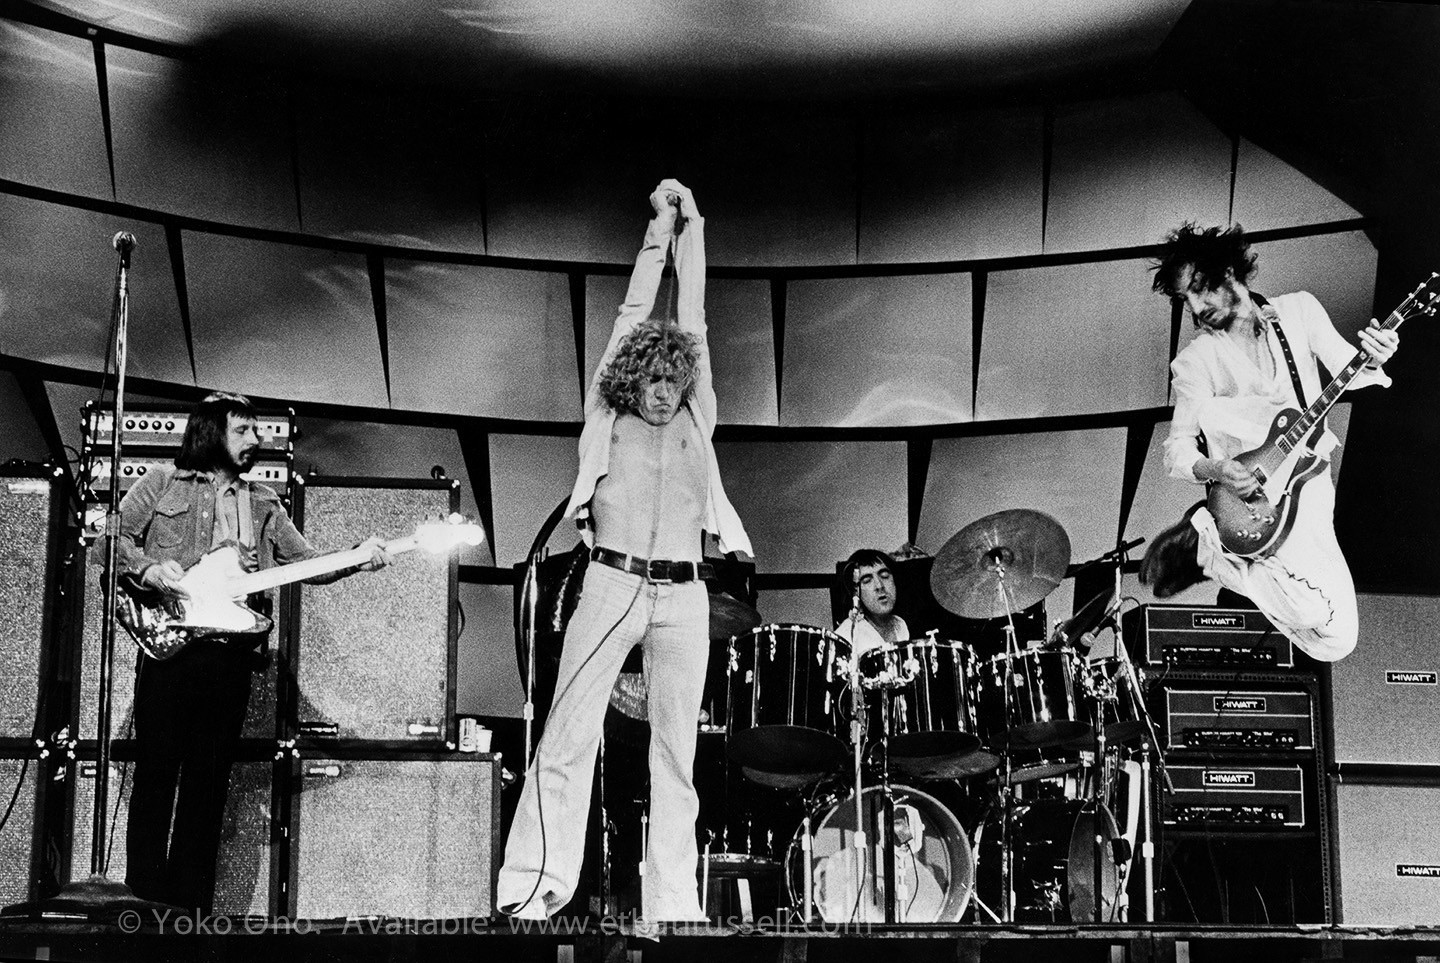 He ones who live. Группа the who концерт 70 года. The who концерт 1976. Who, the – Live at Leeds. Группа the who 1969.